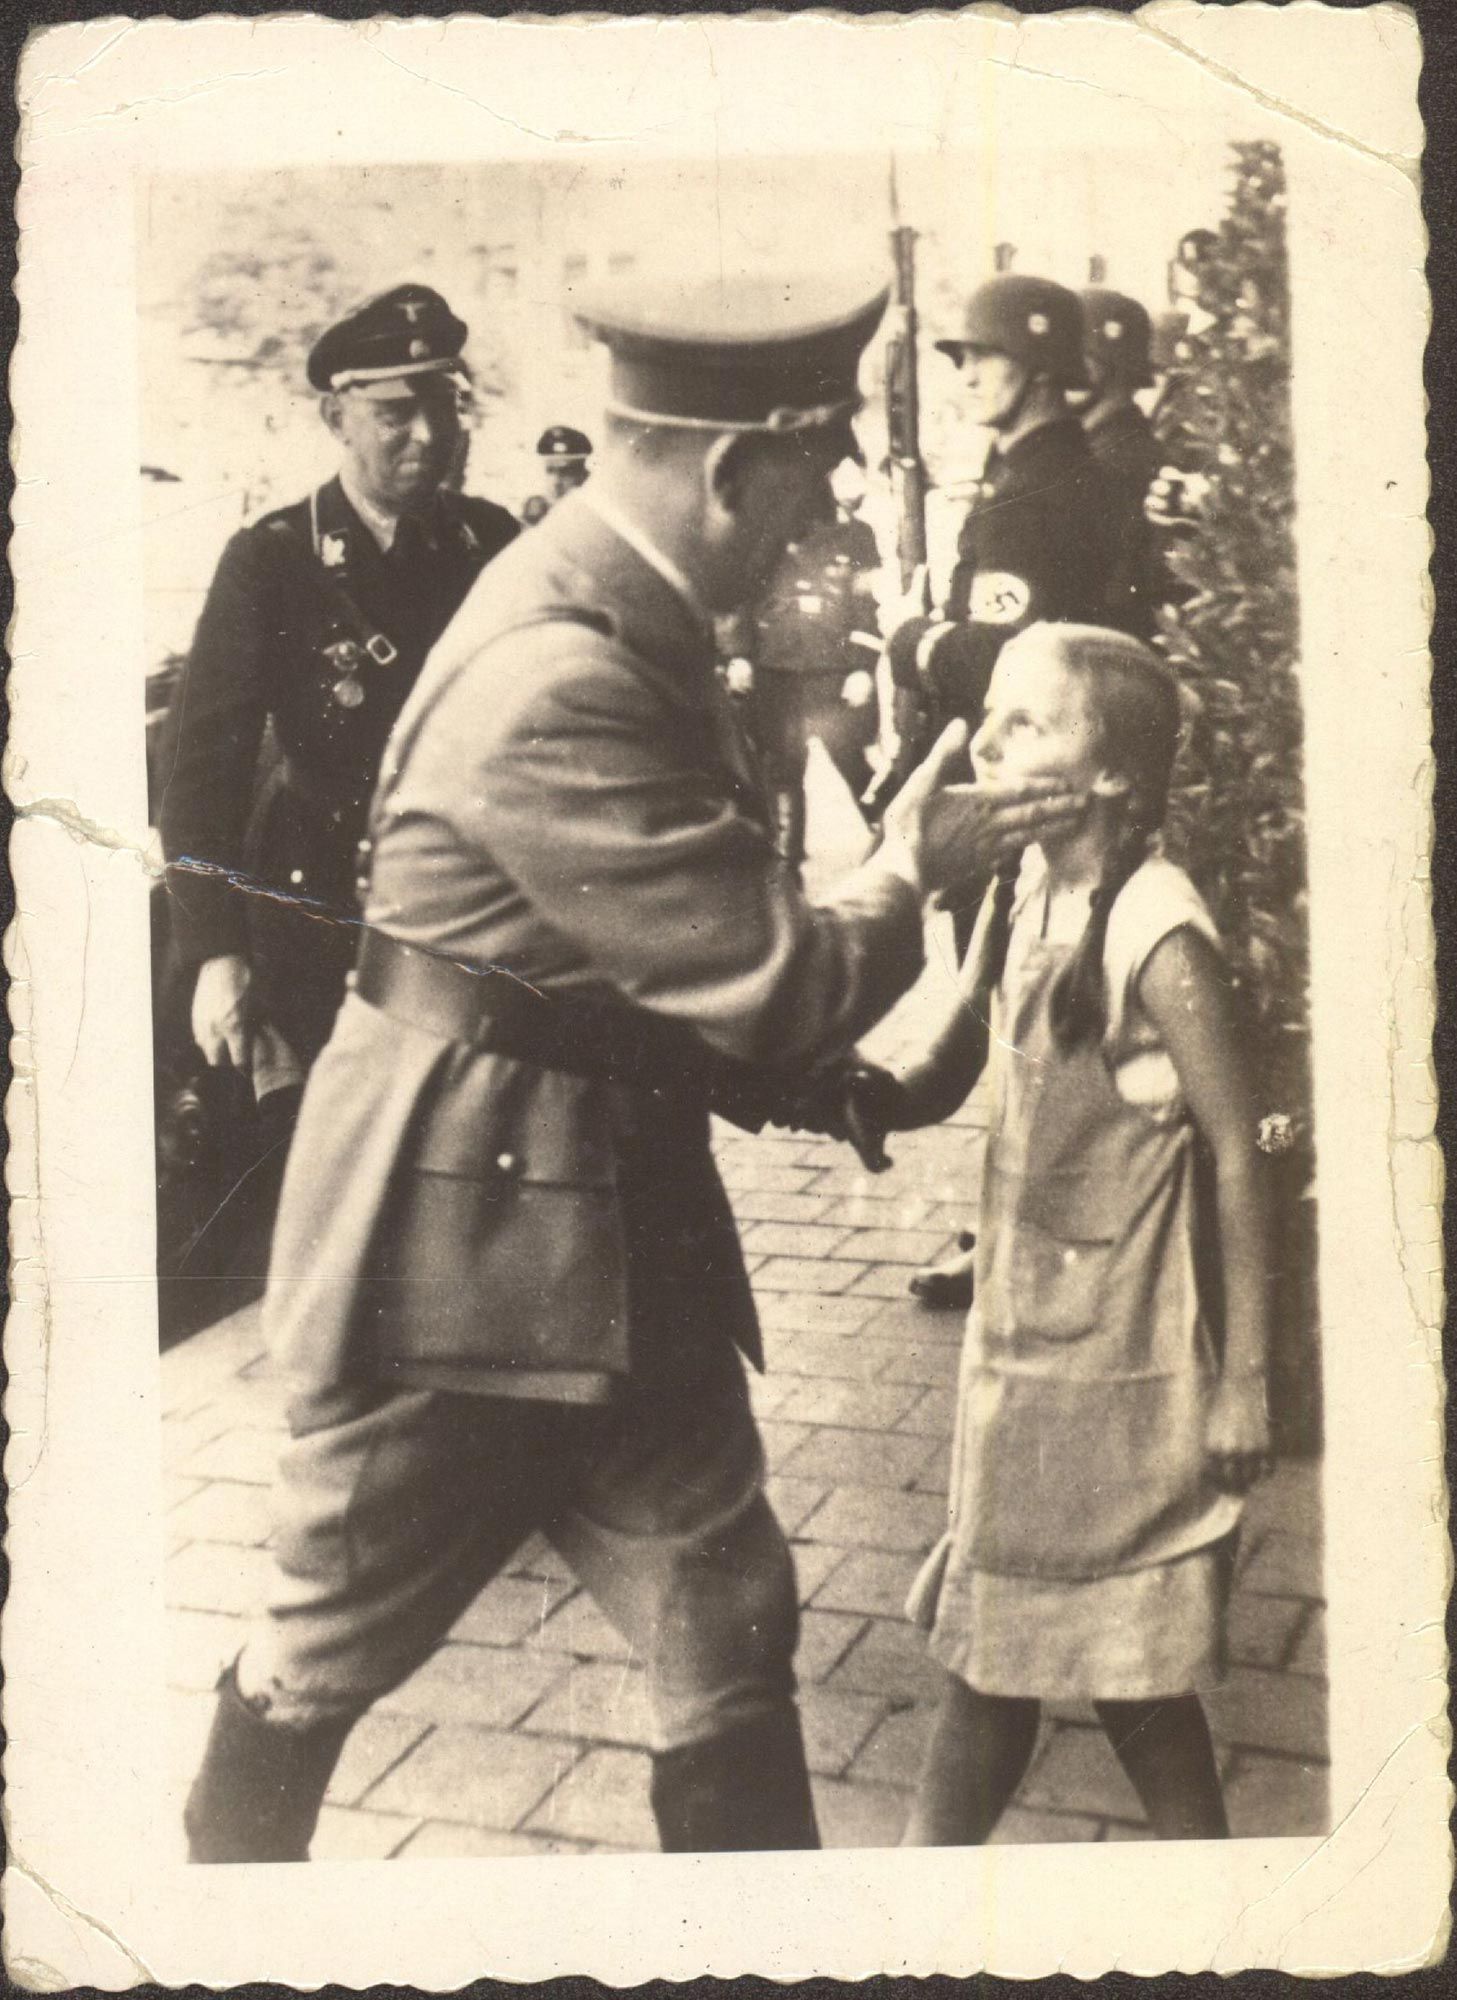 Adolf Hitler slaps a child for losing World War II